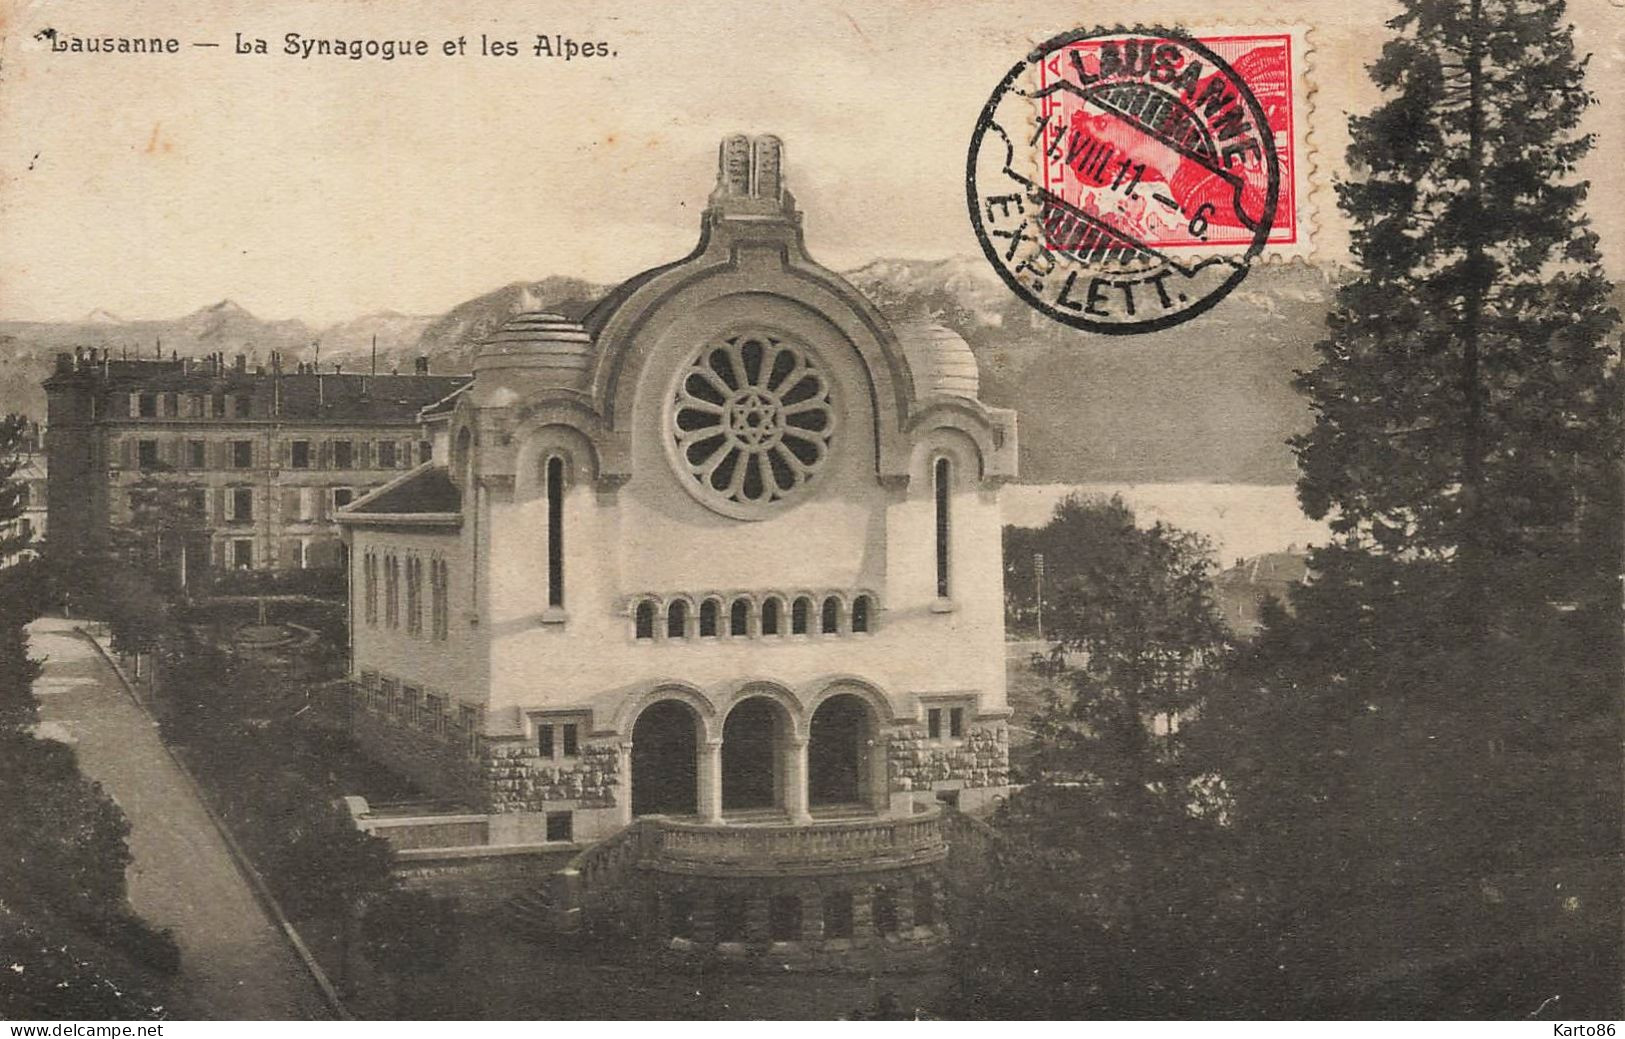 Lausanne , Vaud * La Synagogue Les Alpes * Judaica Synagoge Temple Israélite Juif Judaisme Jew Jewish Suisse Schweiz - Jewish